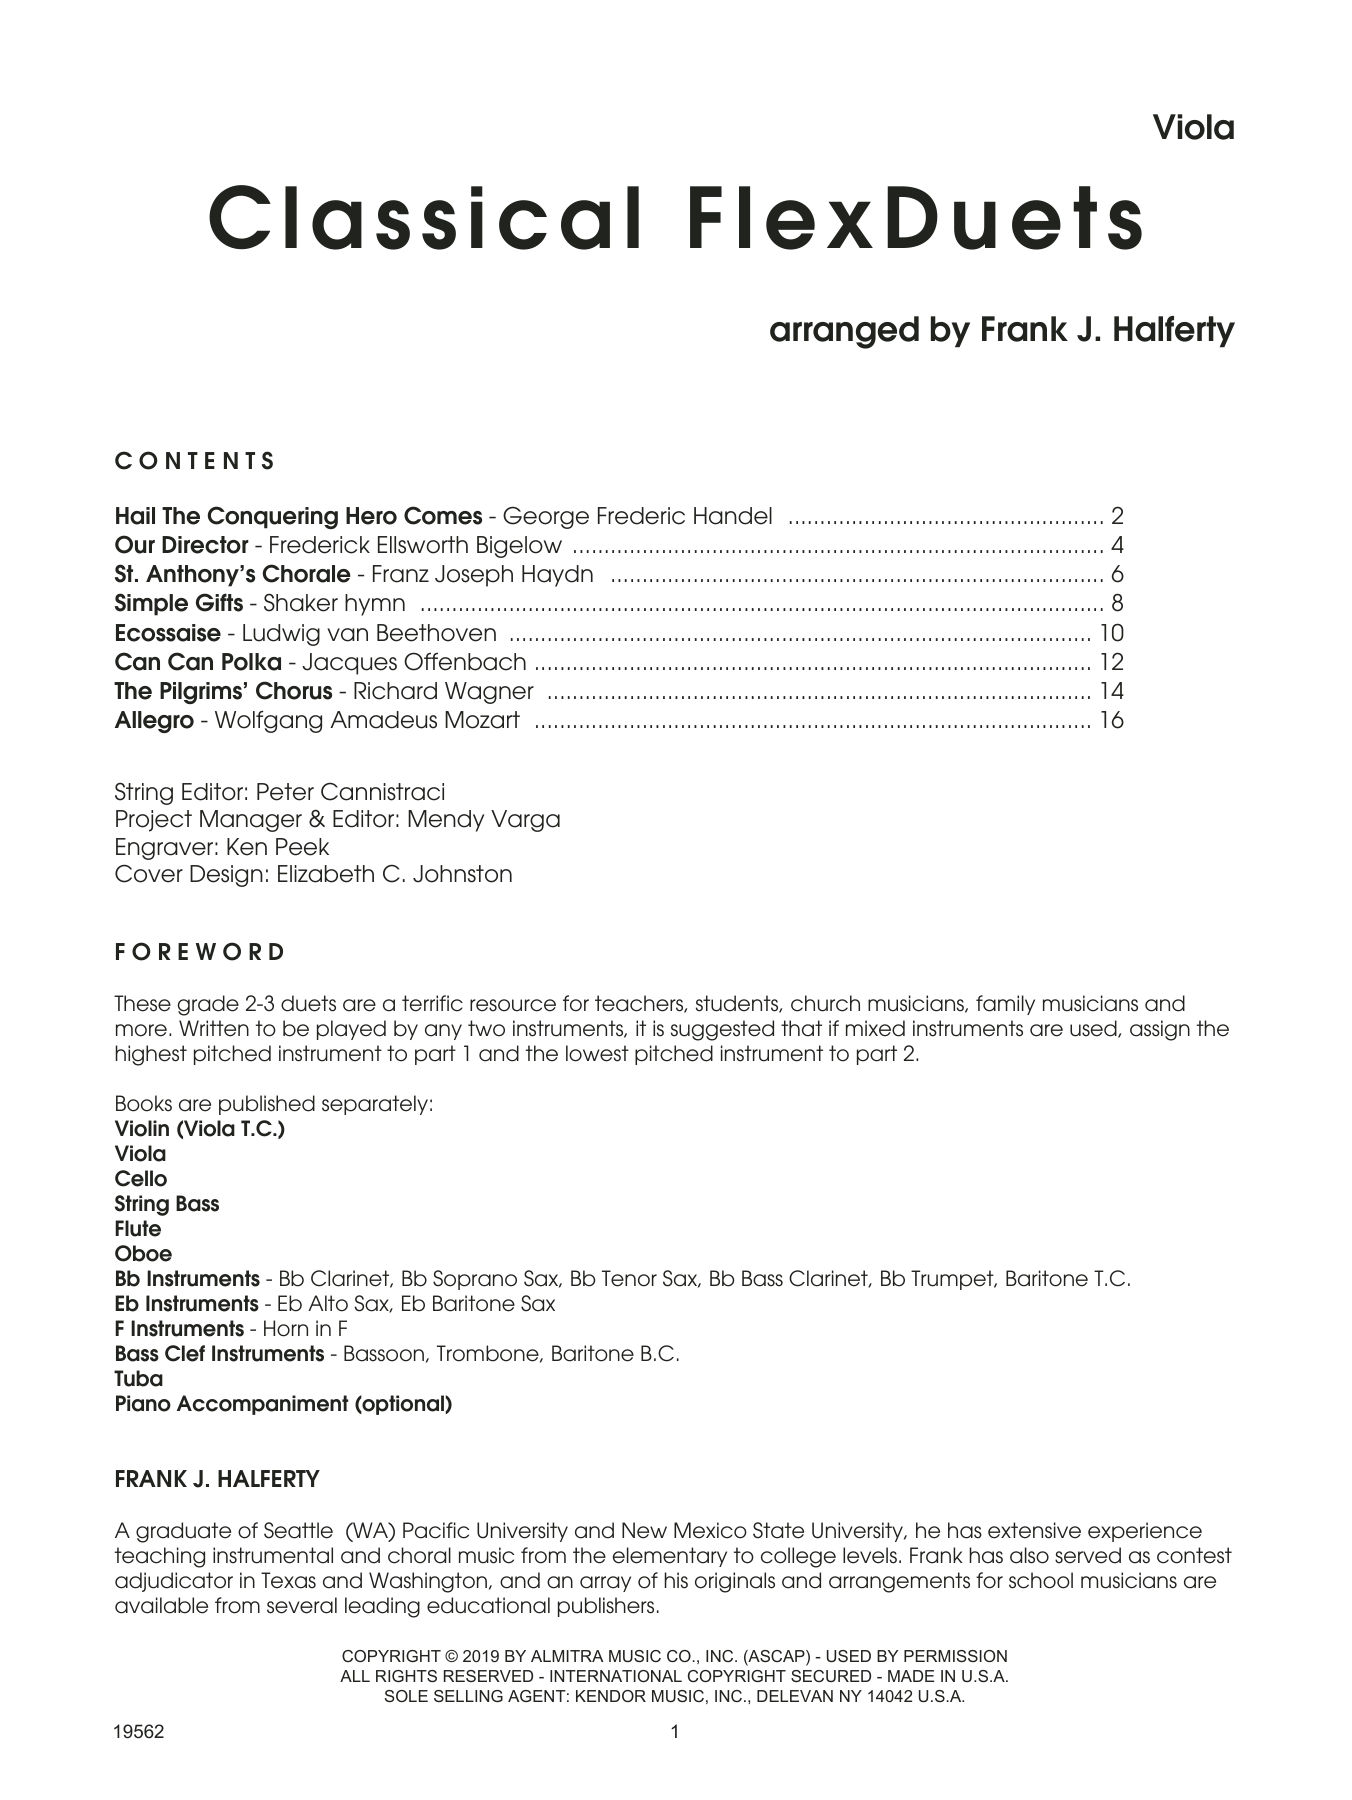 Download Frank J. Halferty Classical Flexduets - Viola Sheet Music